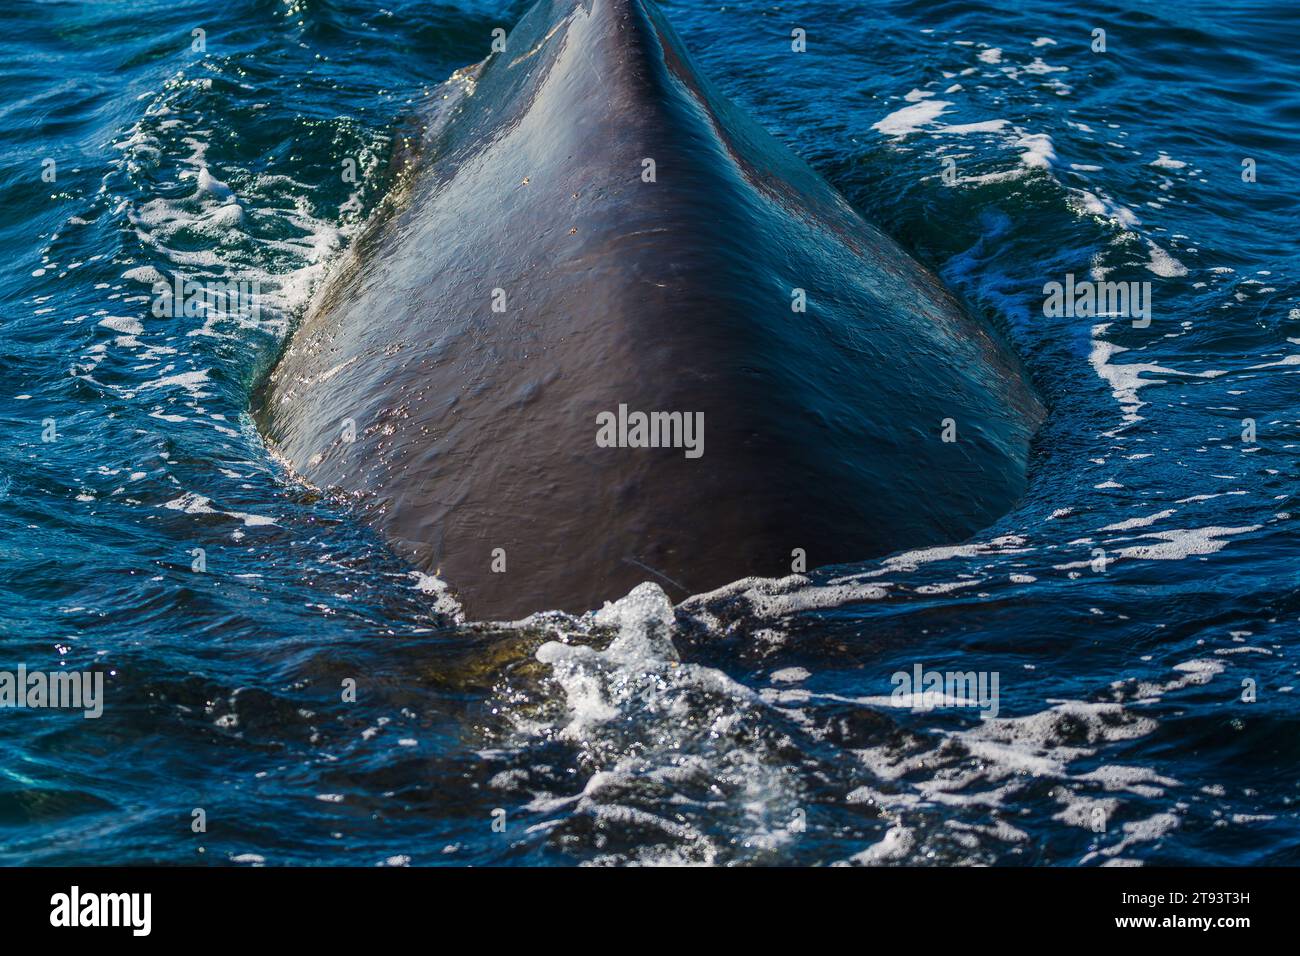 Vista de cerca de la ballena de espalda adulta Foto de stock